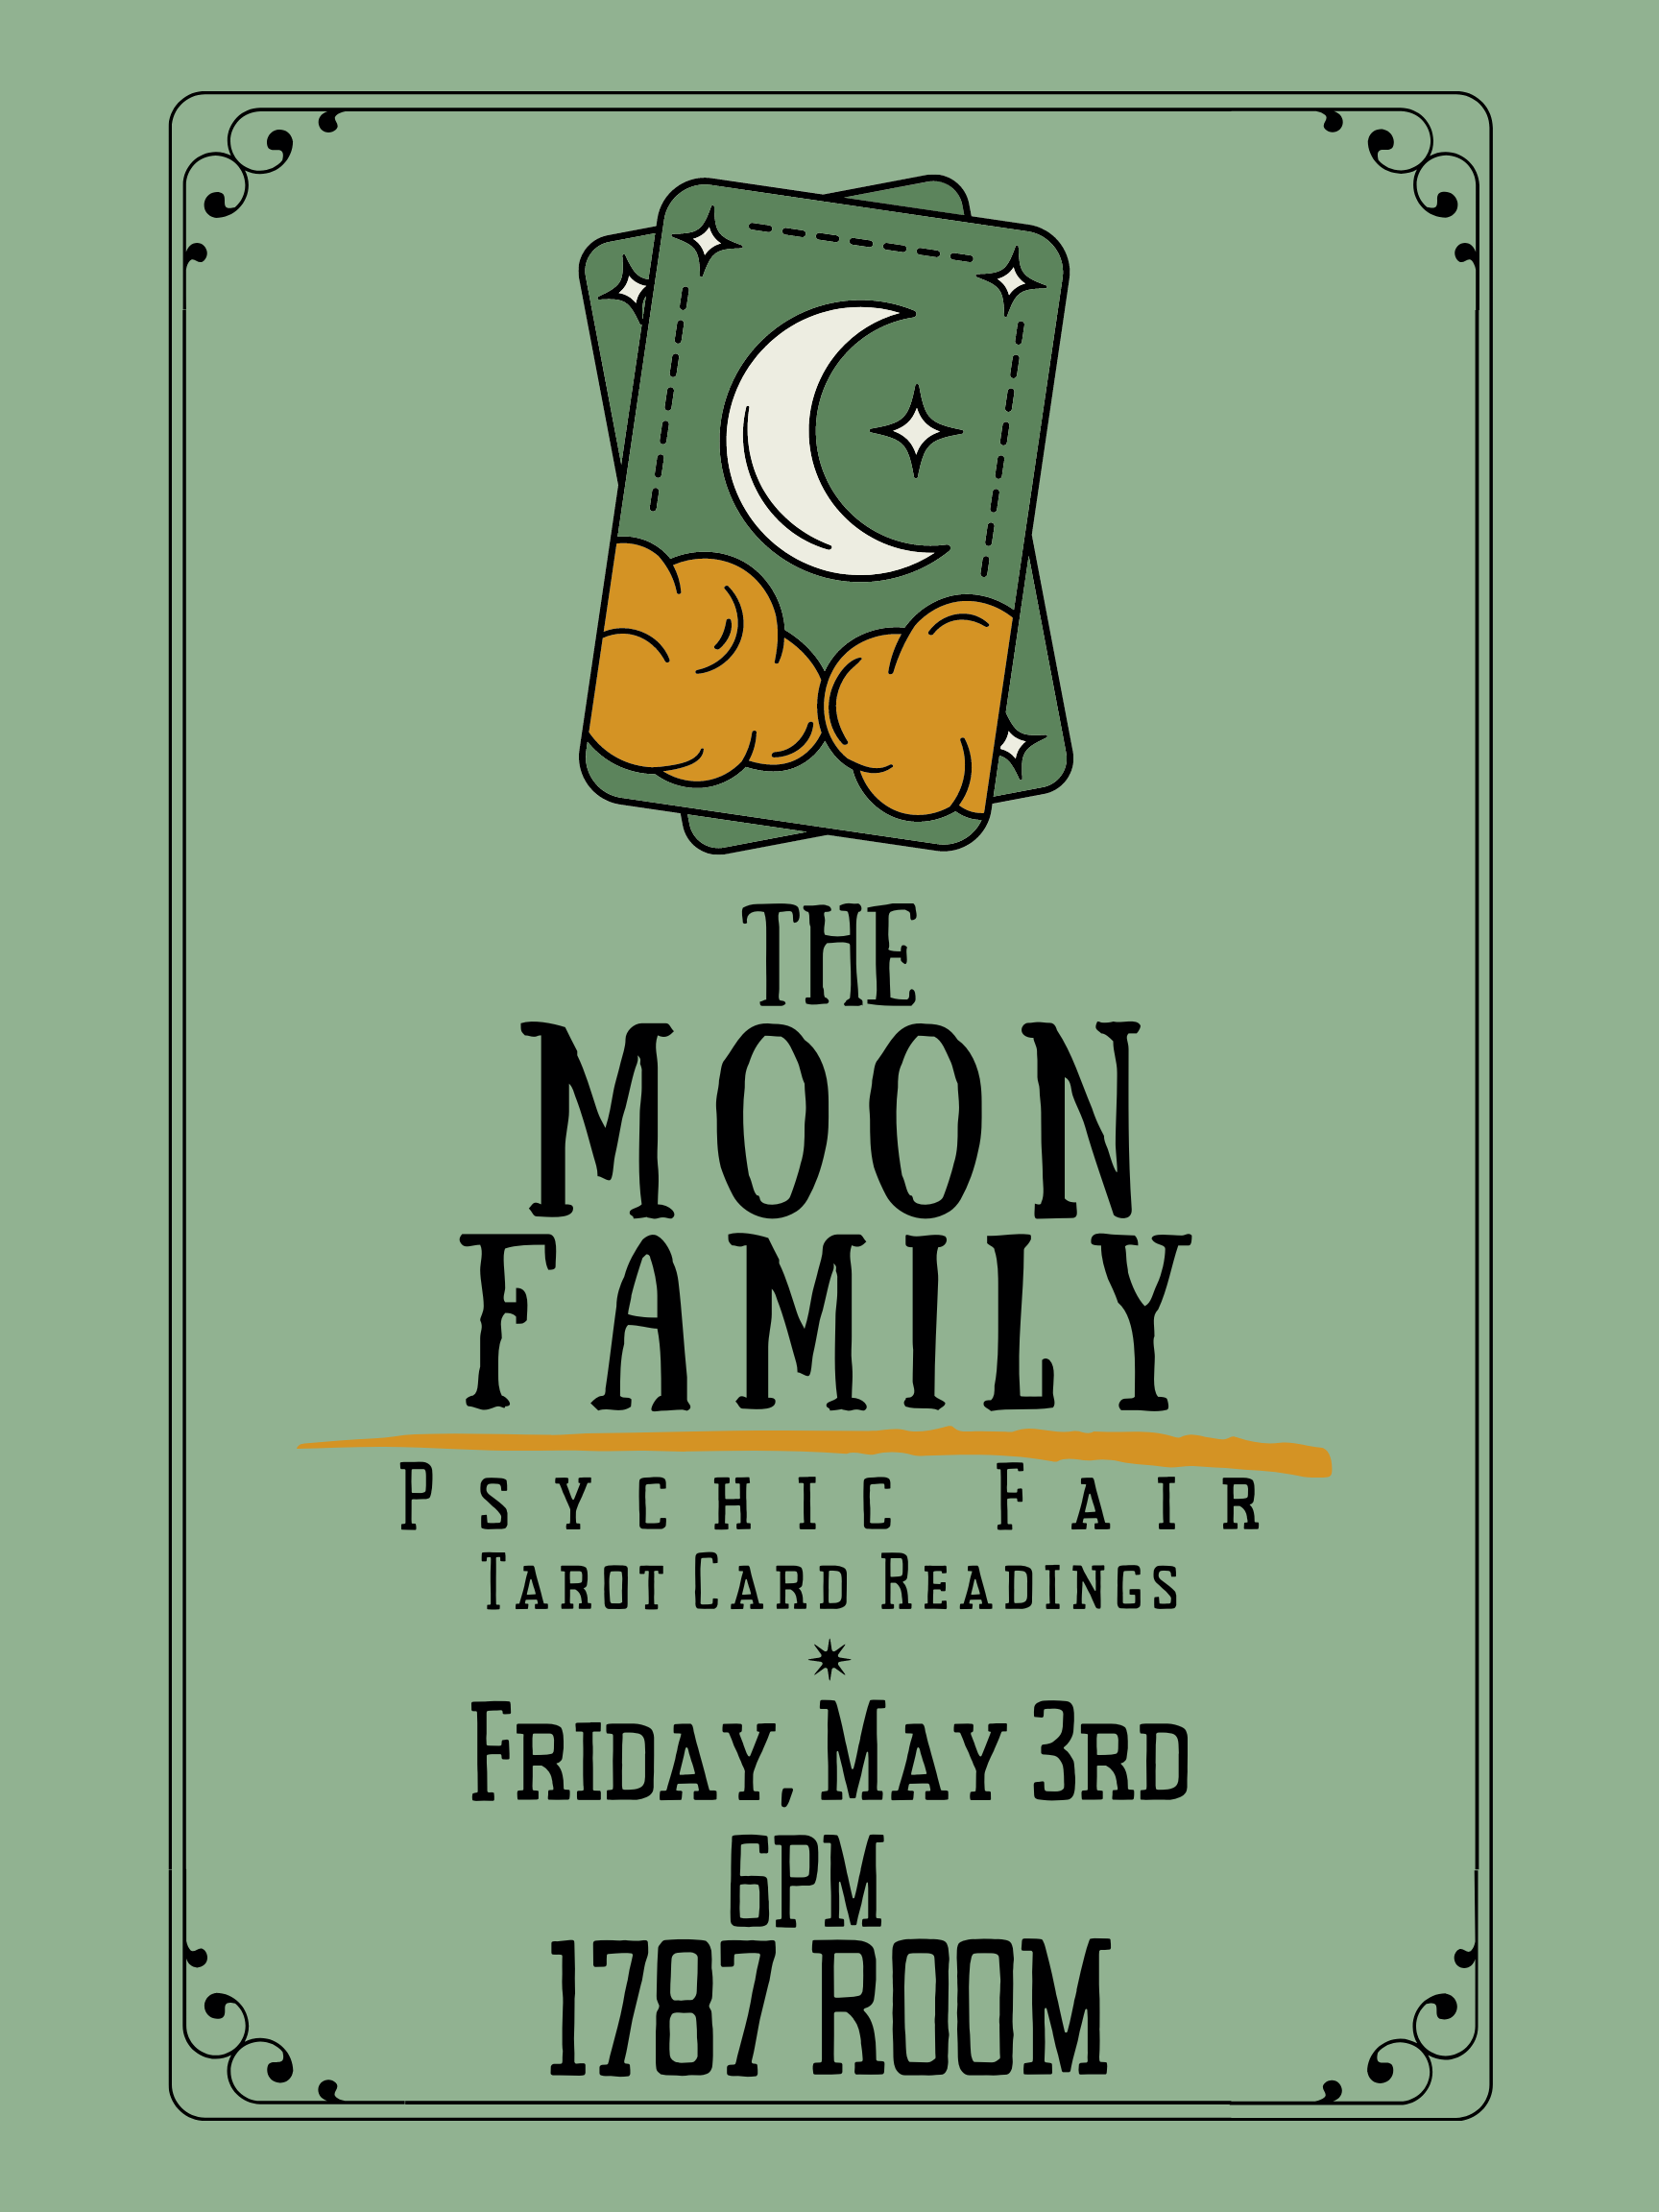 The Moon Family: Psychic Fair

*Tarot Card Readings*

Friday, May 3rd

6 pm | 1787 Room